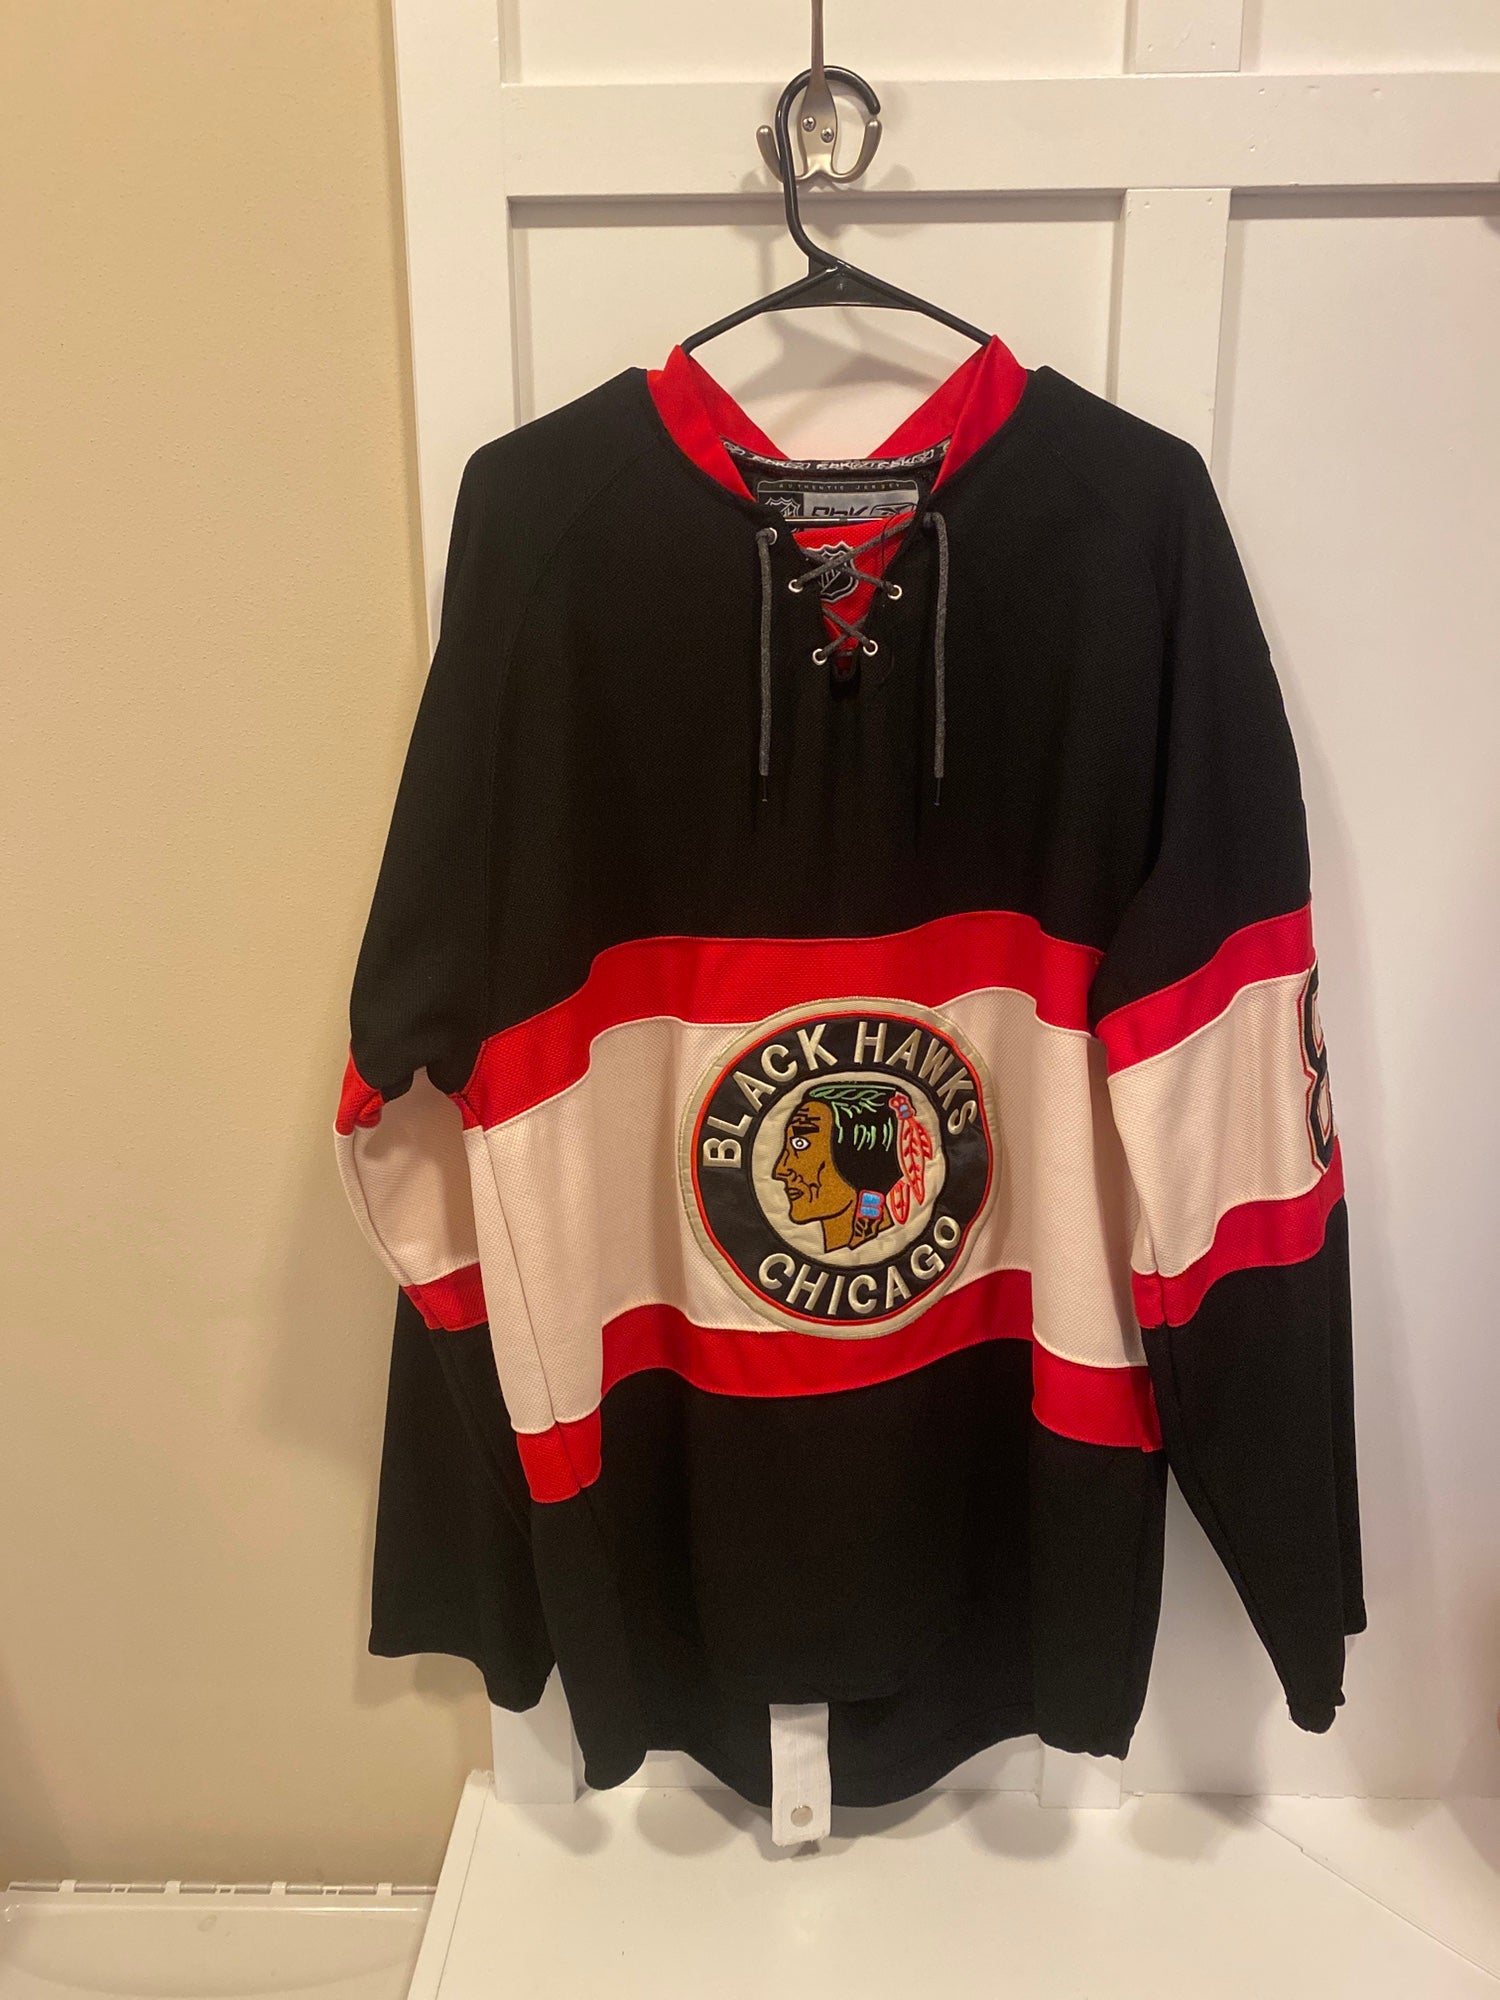 Chicago Blackhawks Patrick Kane Hockey Jersey 52